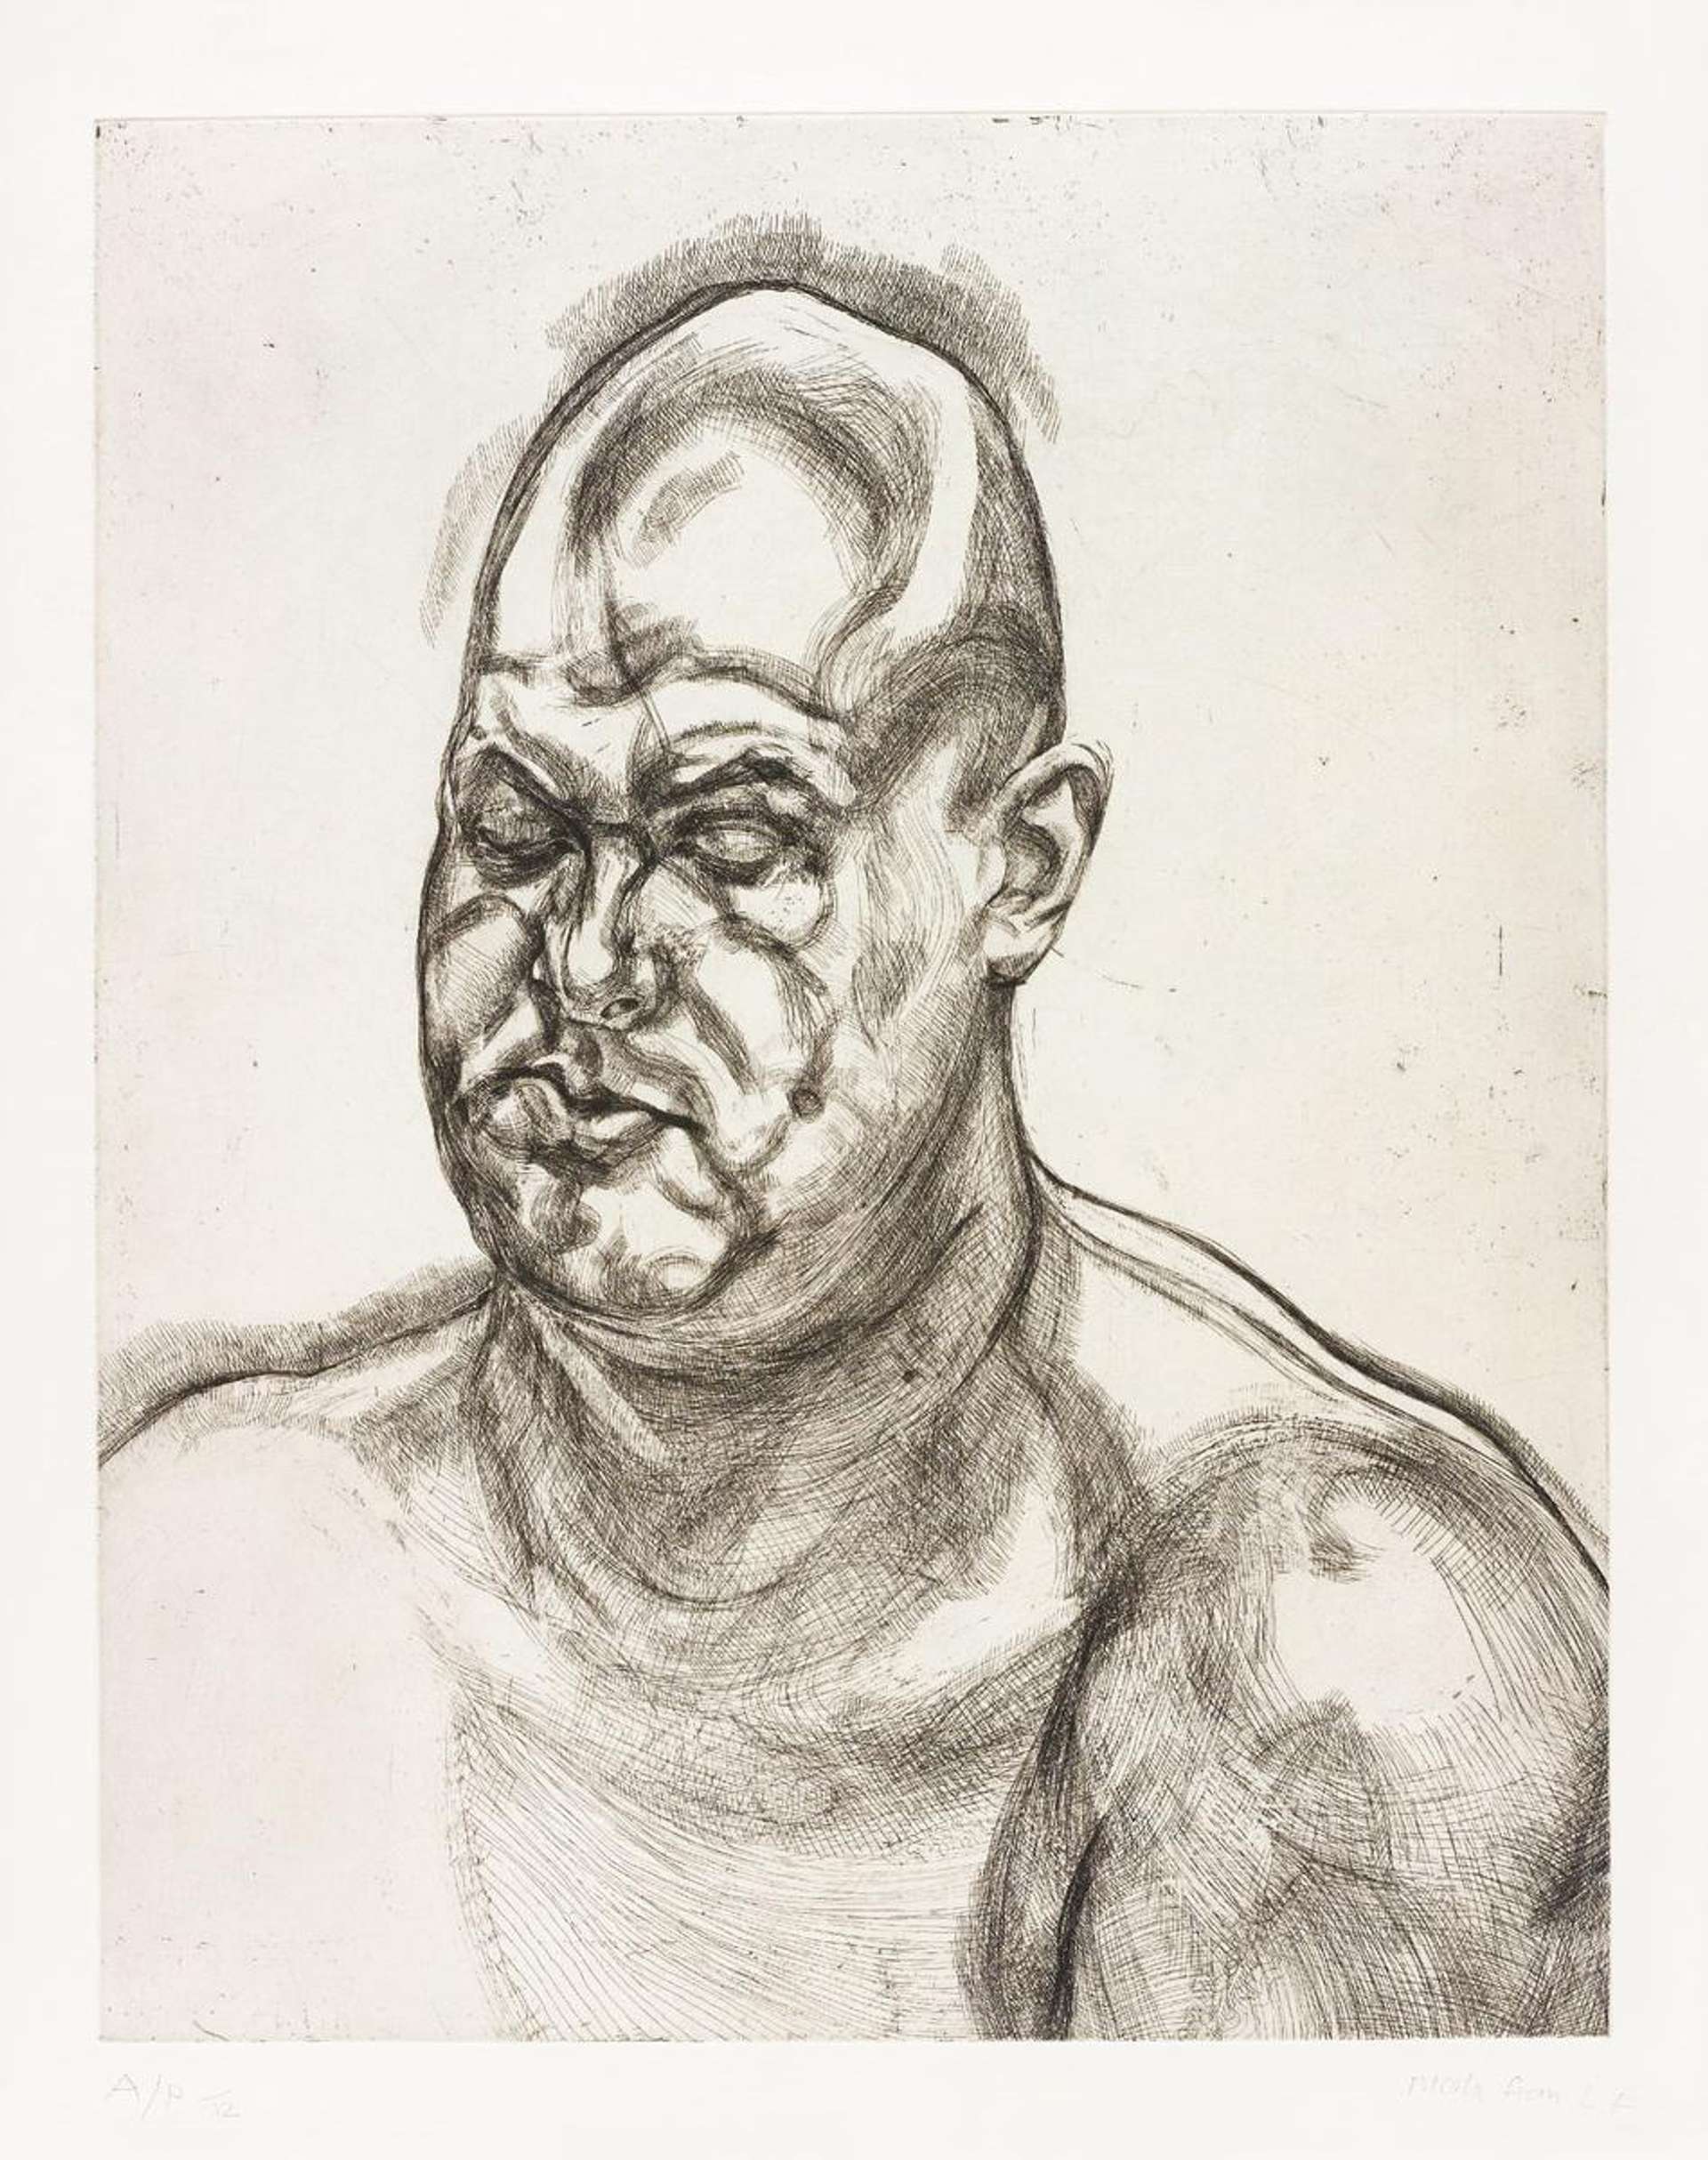 Lucian Freud: Large Head - Signed Print